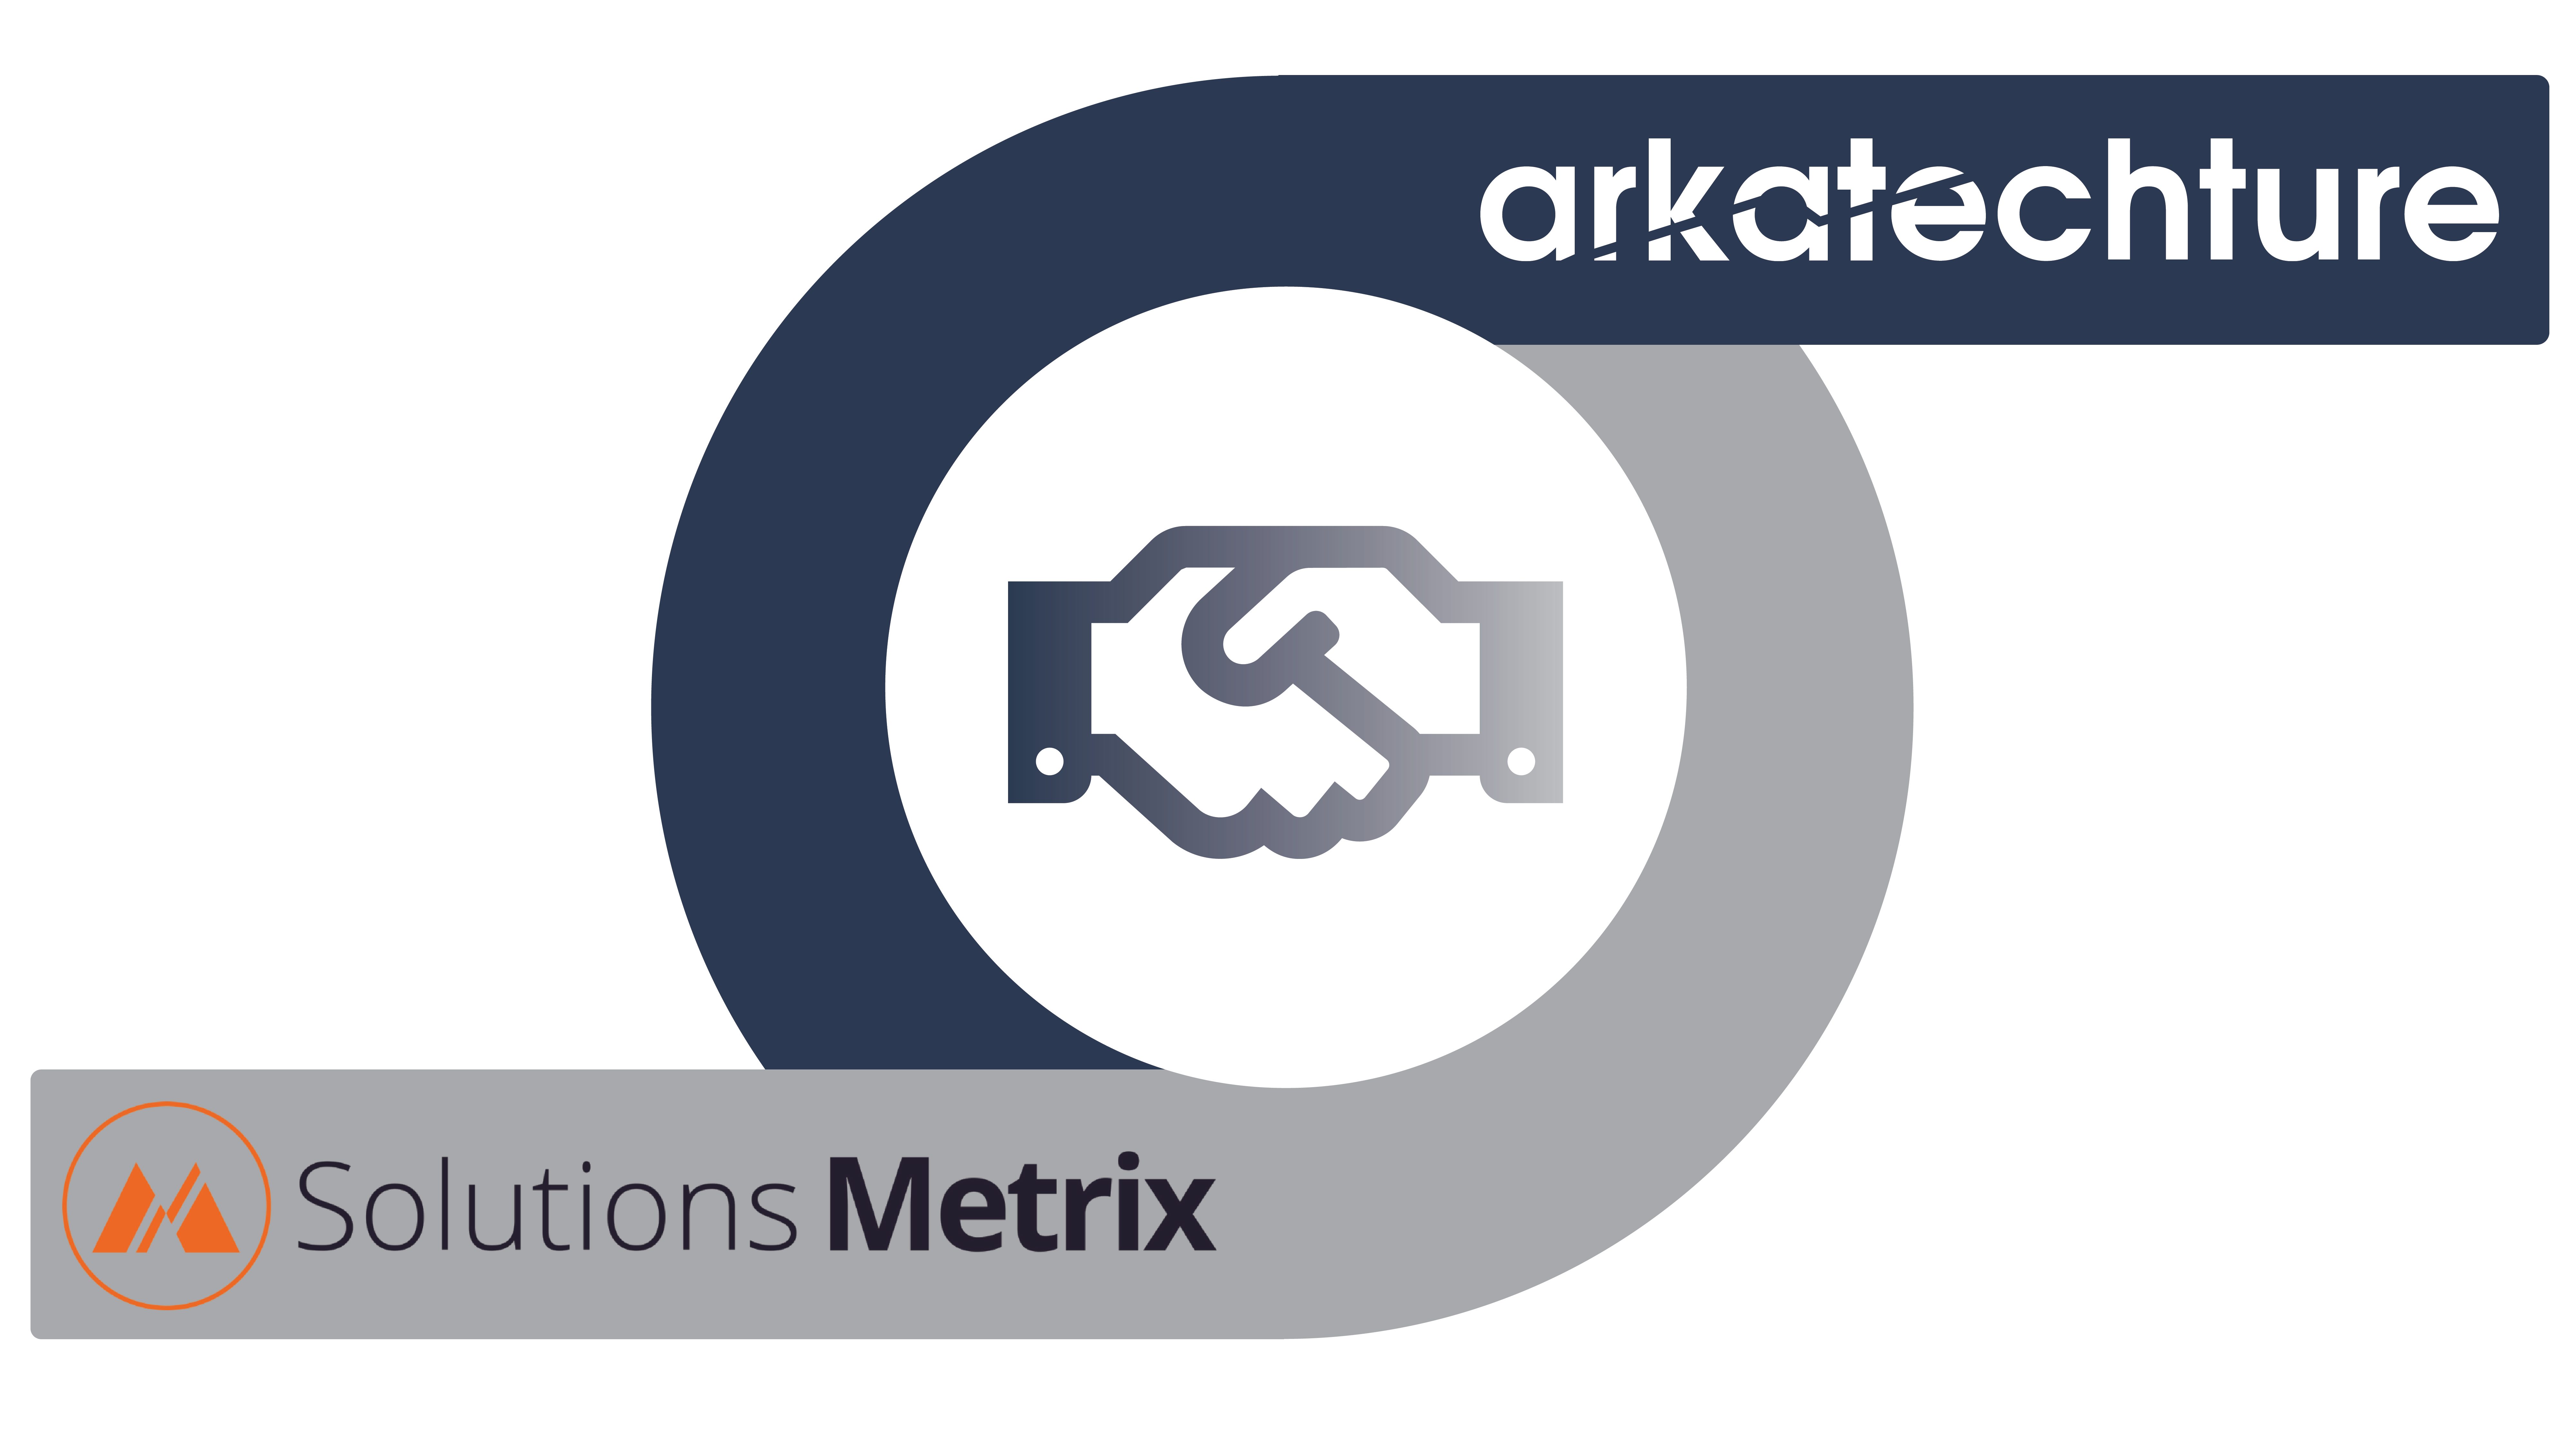 Arkatechture & Solutions Metrix Partner for Data-Driven Credit Union Growth